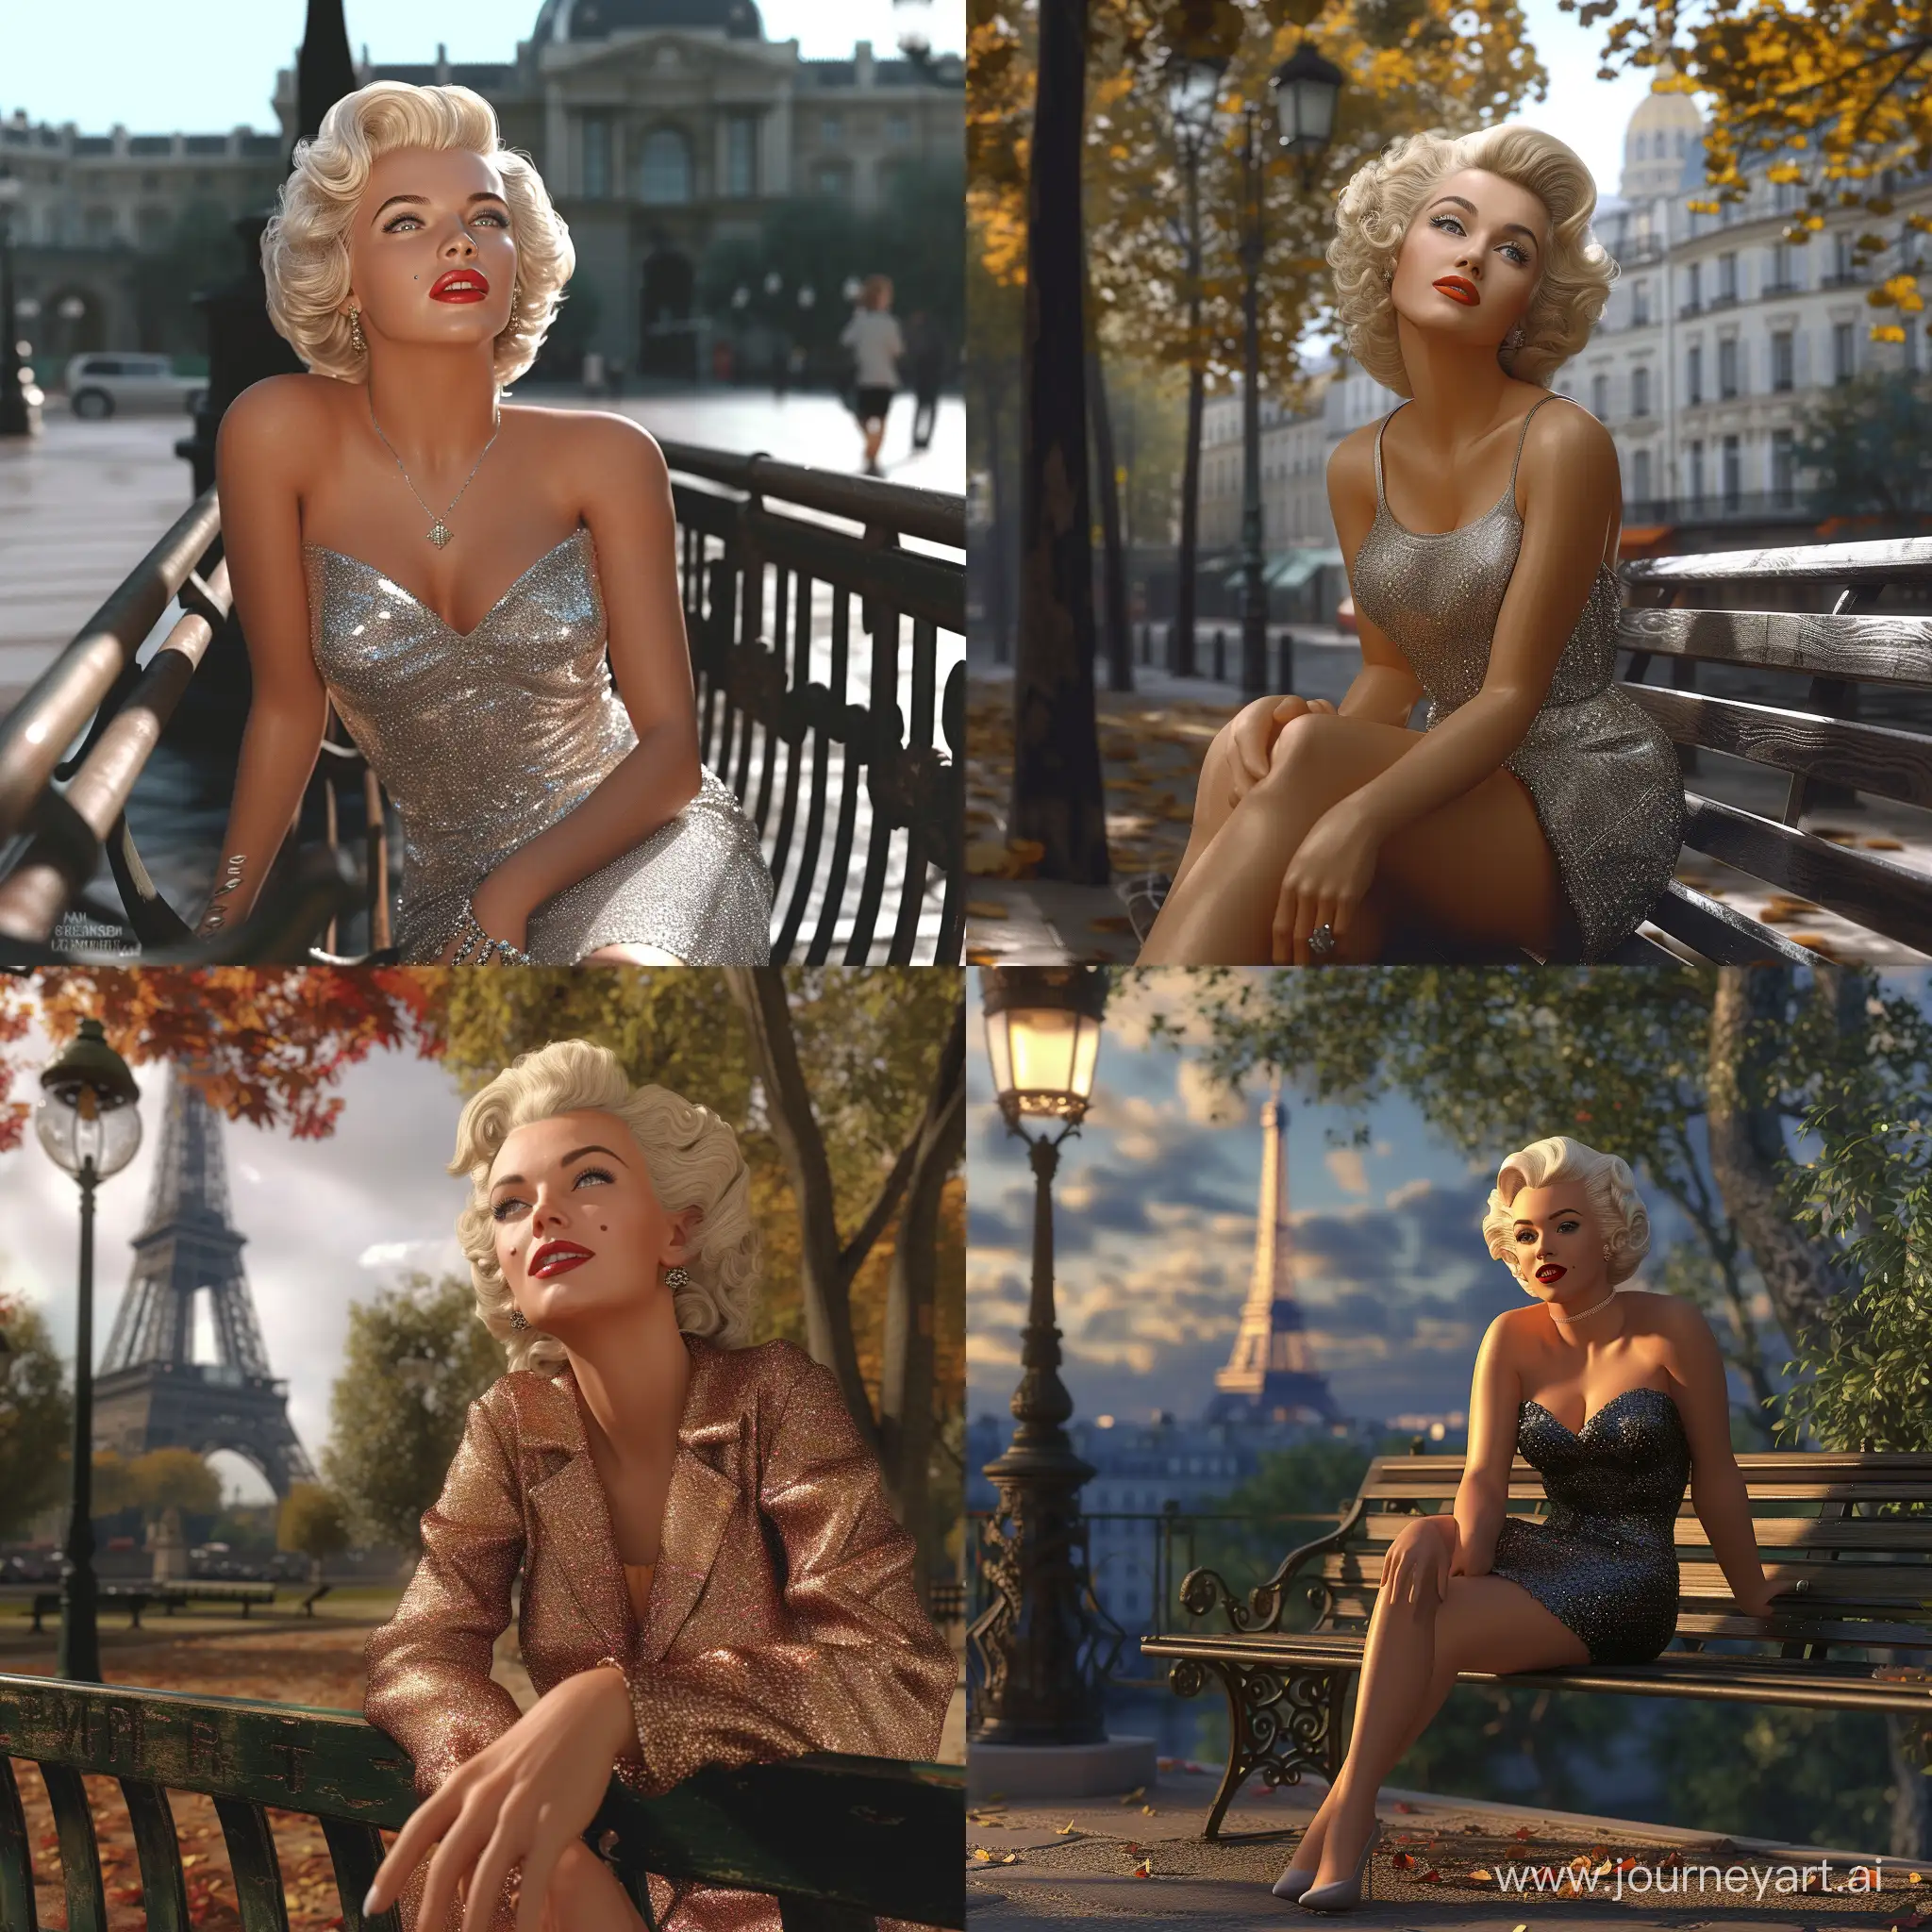 Marilyn-Monroe-in-Paris-Photorealistic-8K-Portrait-on-a-Bench